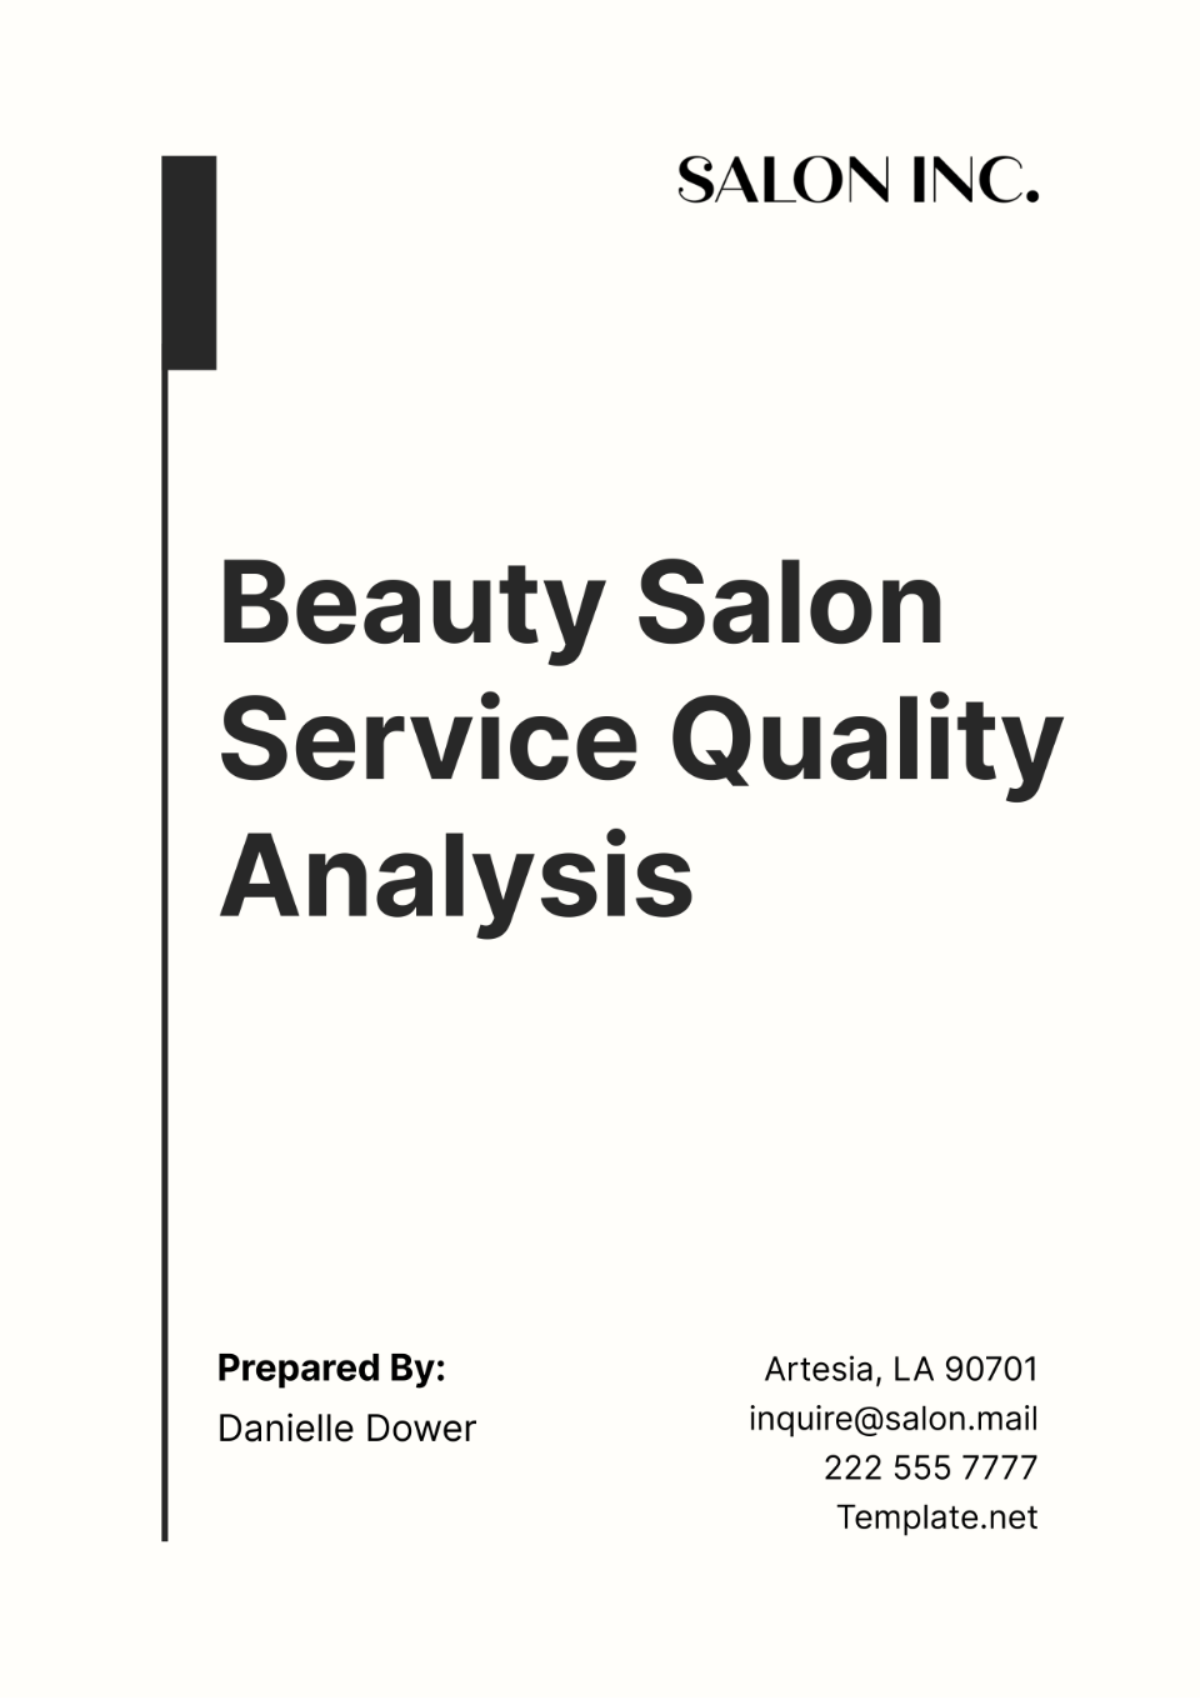 Beauty Salon Service Quality Analysis Template